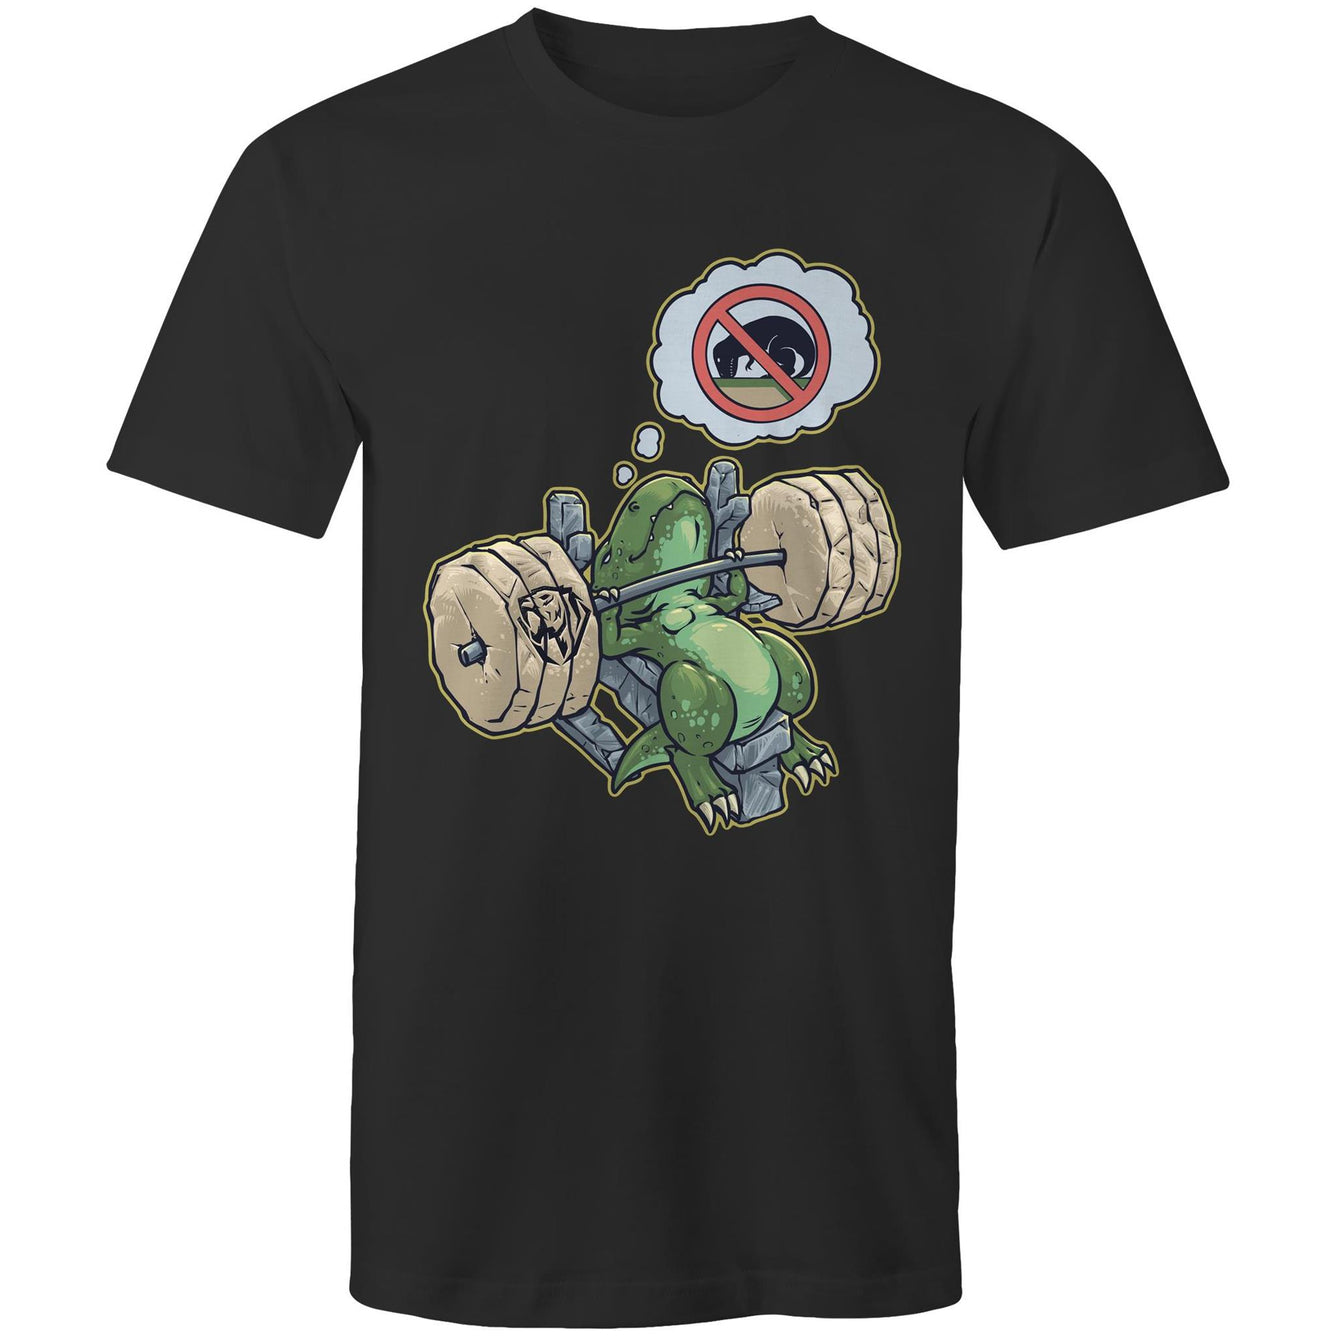 T-rex loves bench press t-shirt (AU)